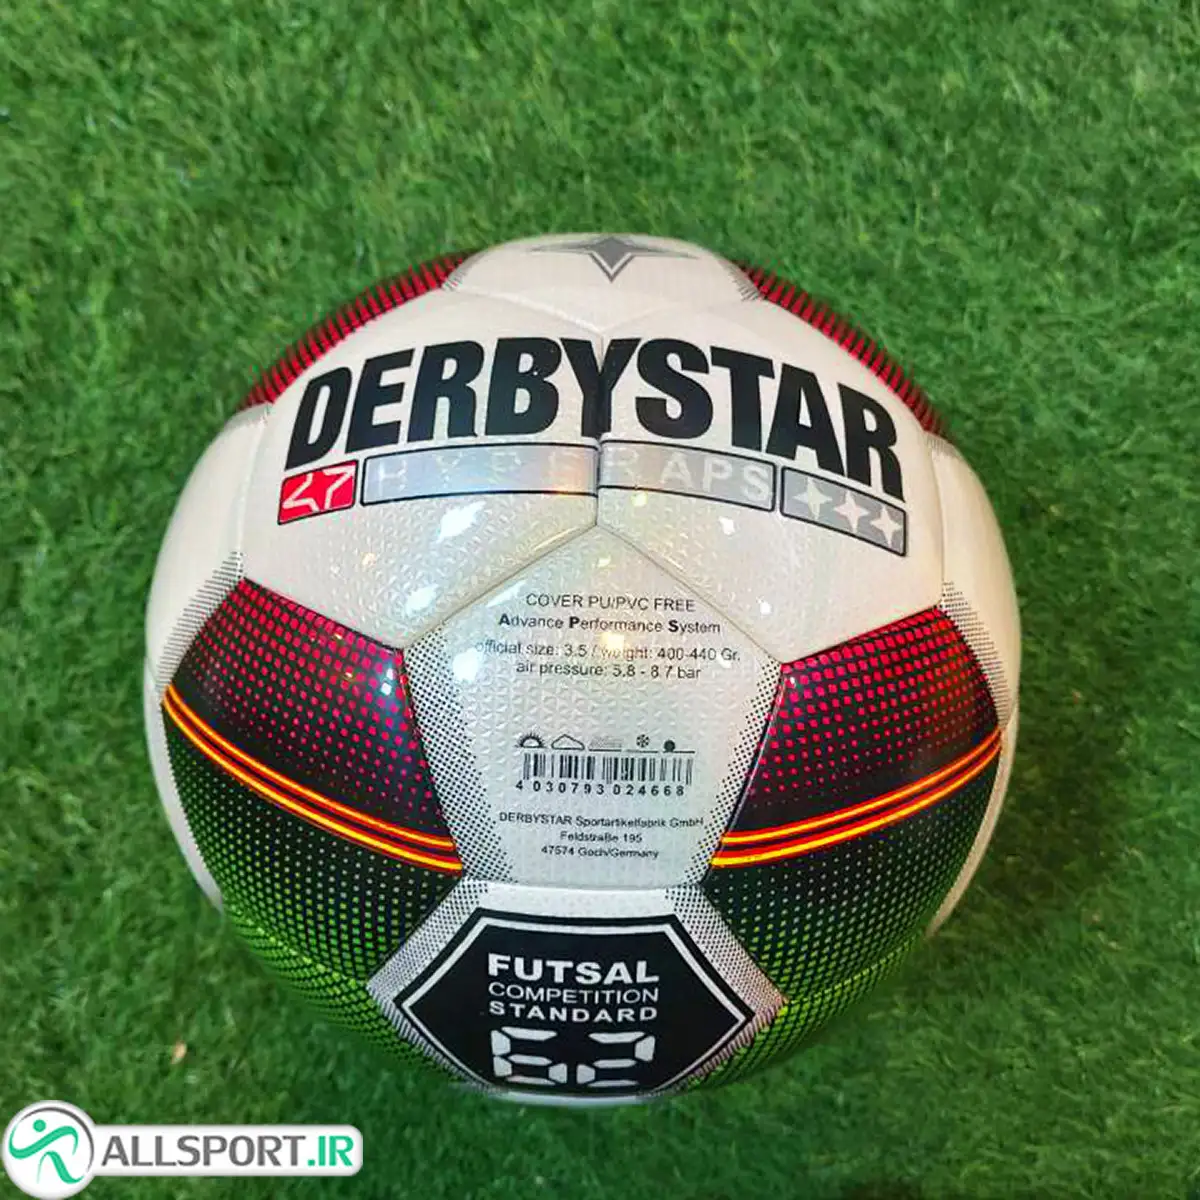 picture توپ فوتسال دربی استار طرح اصلی Derby Star futsal ball Green White Red